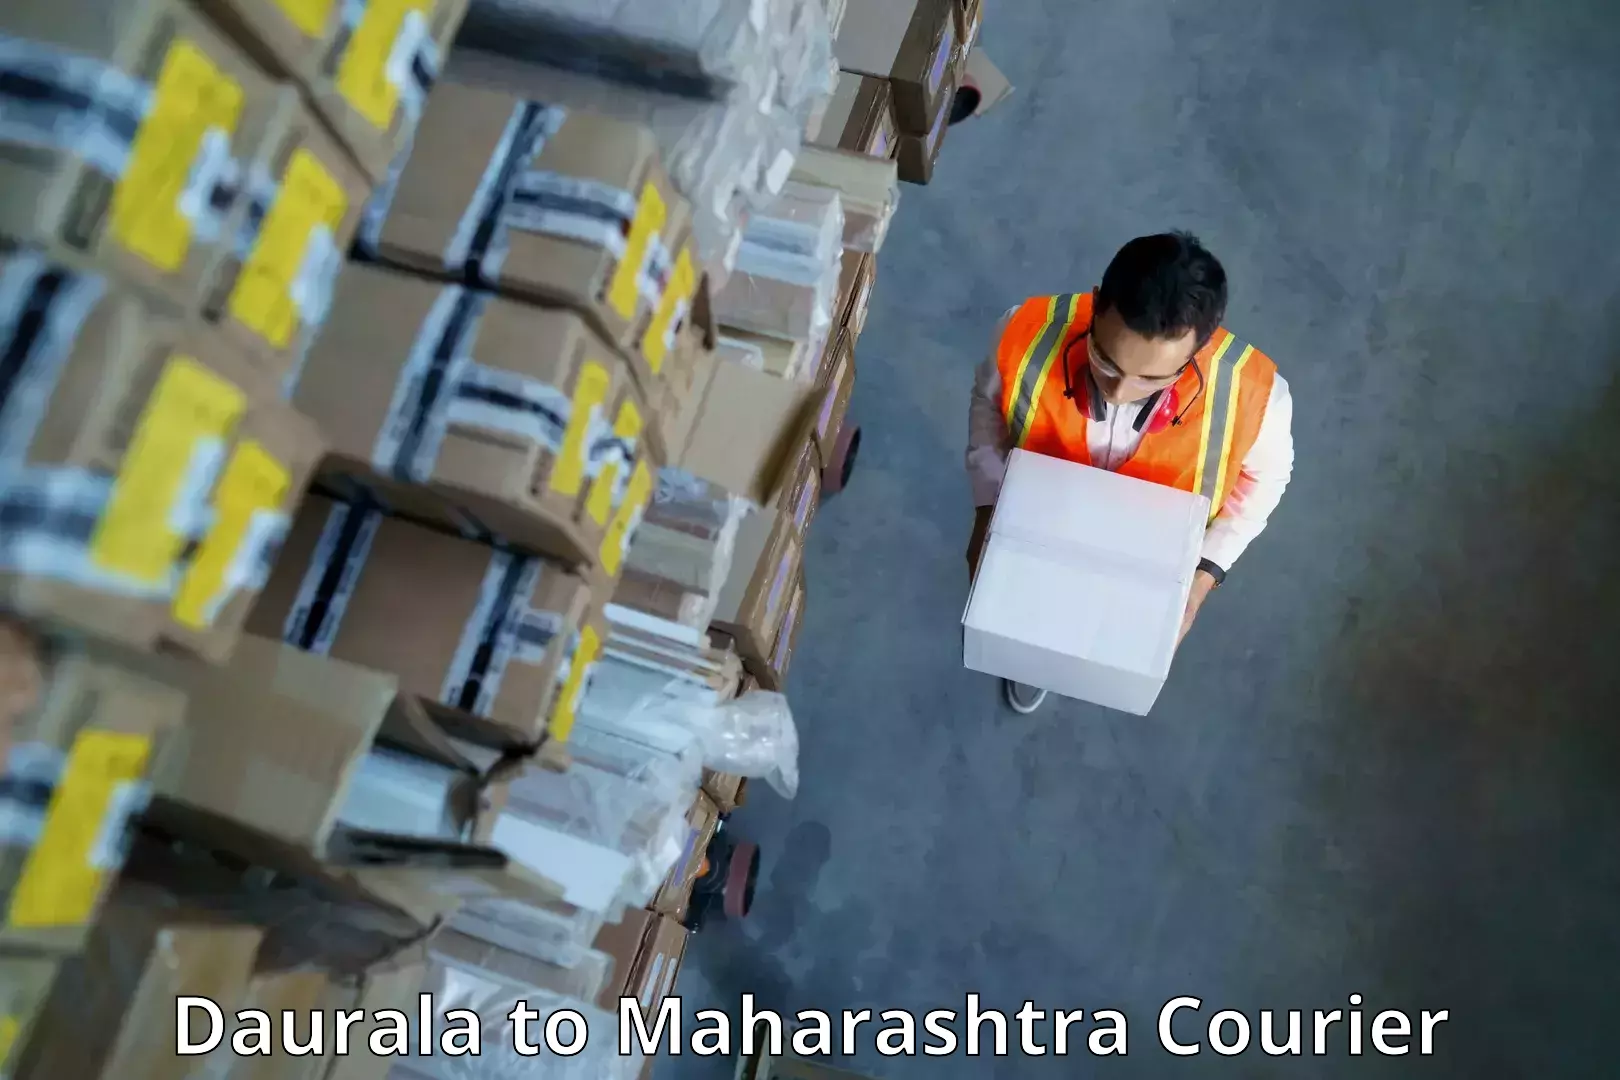 On-call courier service Daurala to Borivali